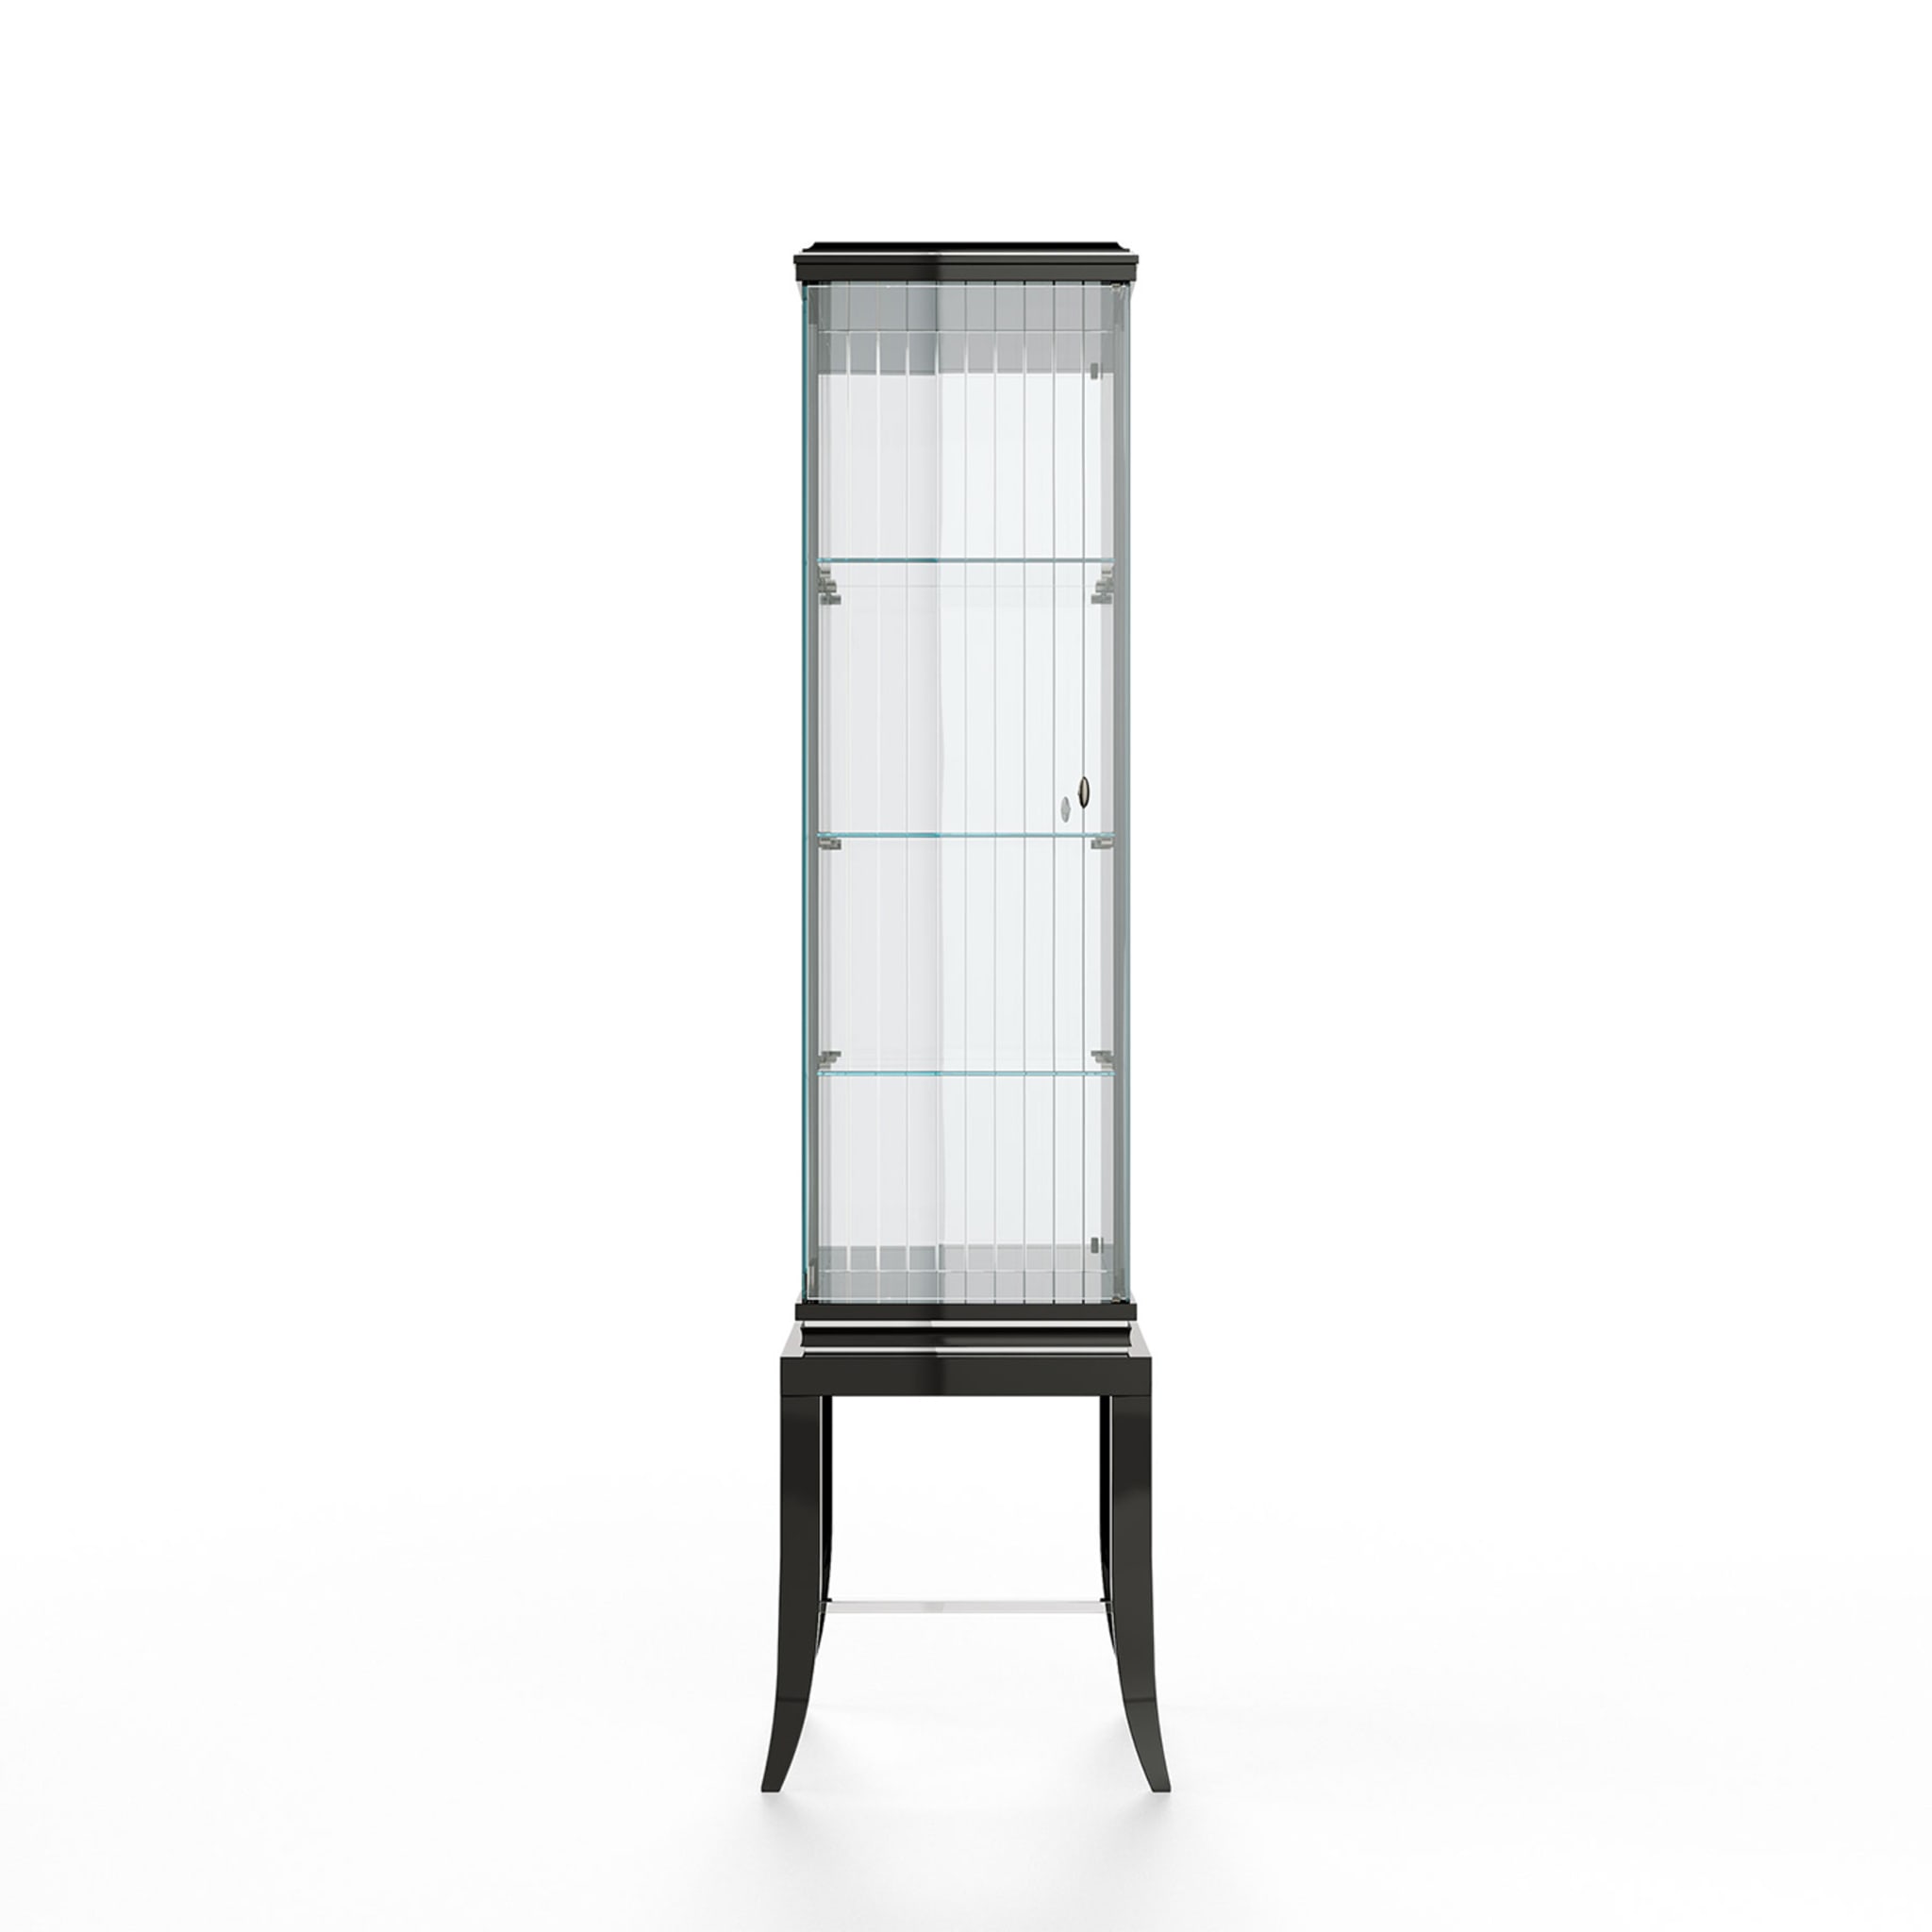 RELEIF display cabinet showcase - Alternative view 1